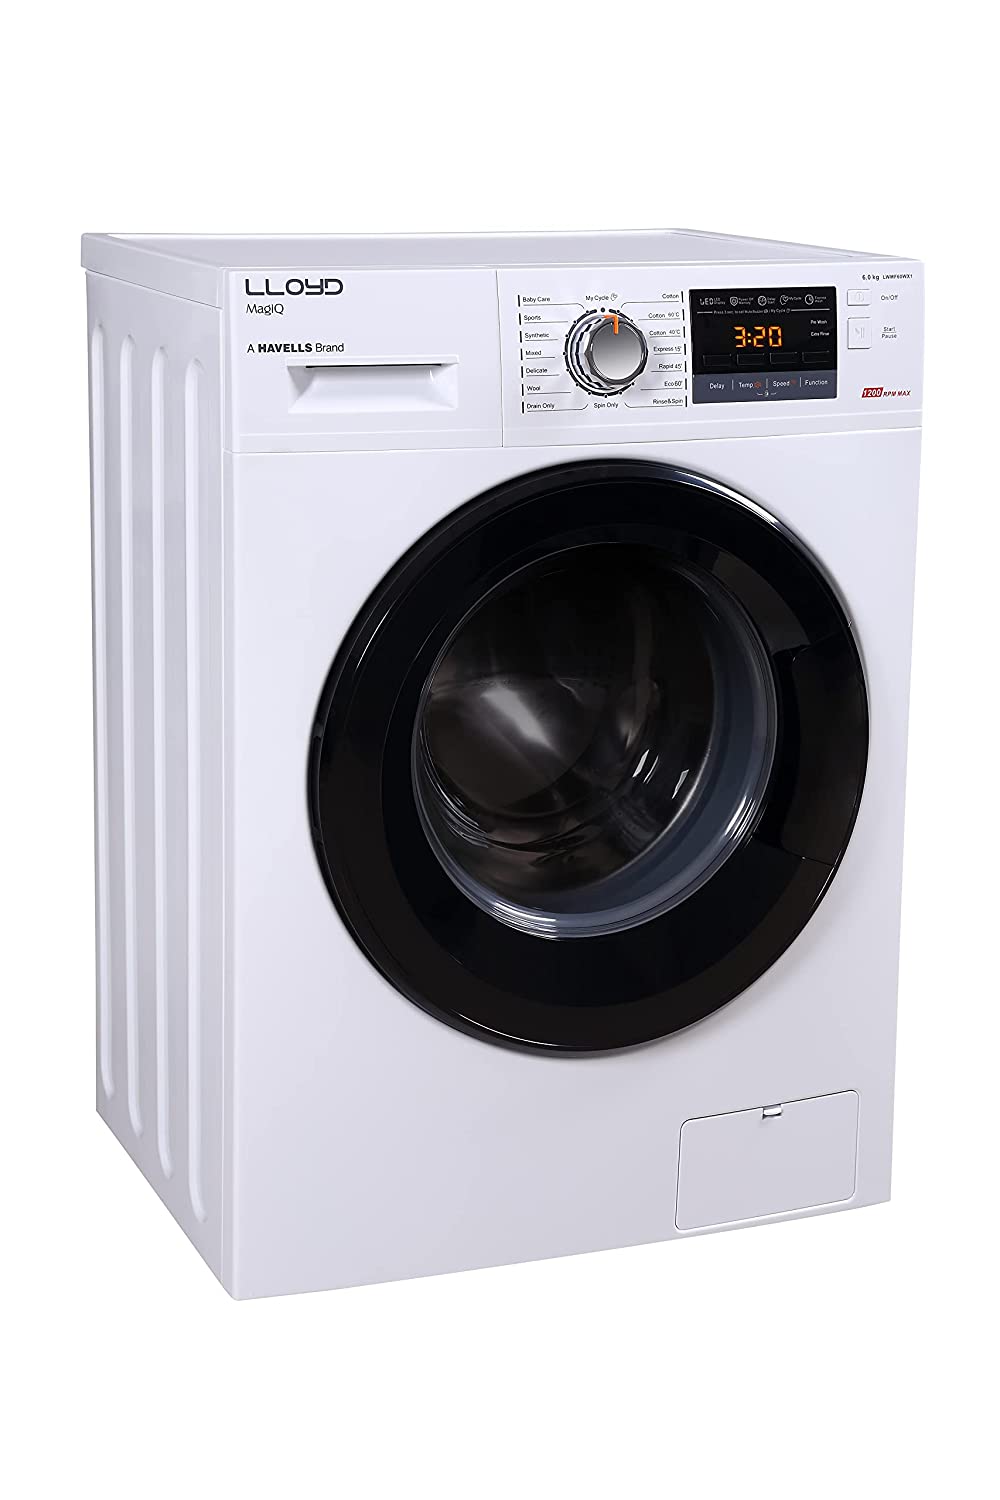 Lloyd 7 kg Fully Automatic Front load washing machine (LWMF70WX3, White,)